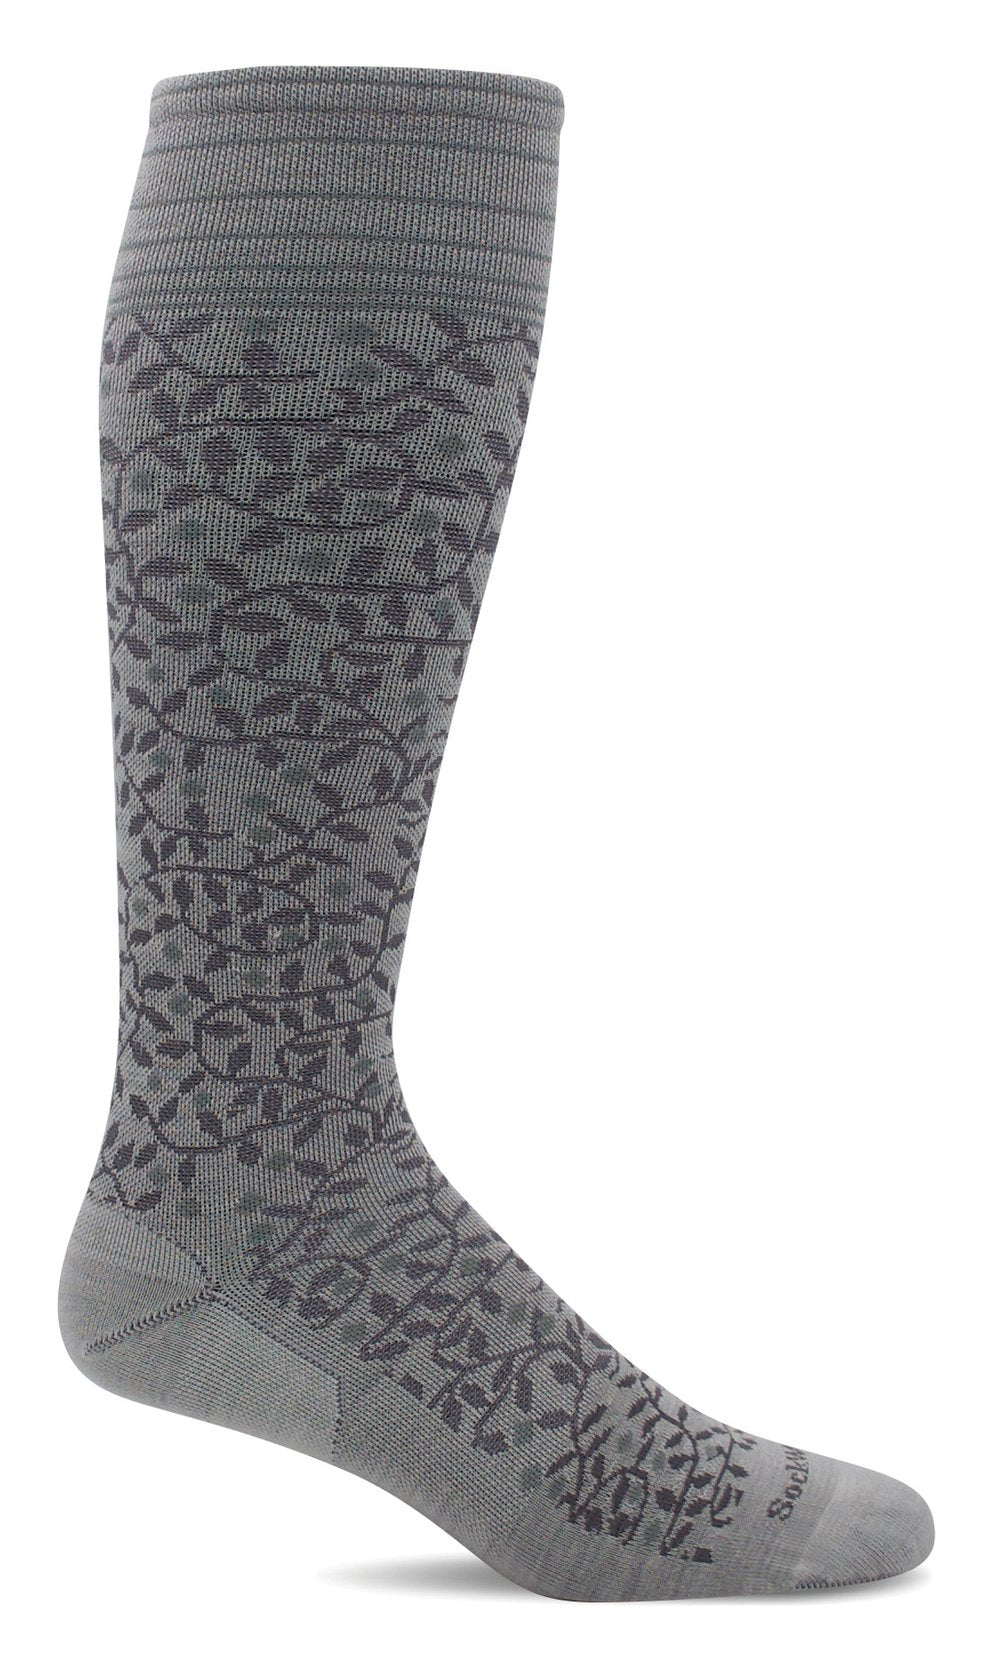 Sockwell Women's "New Leaf" Firm (20-30mmHg) Graduated Compression Socks